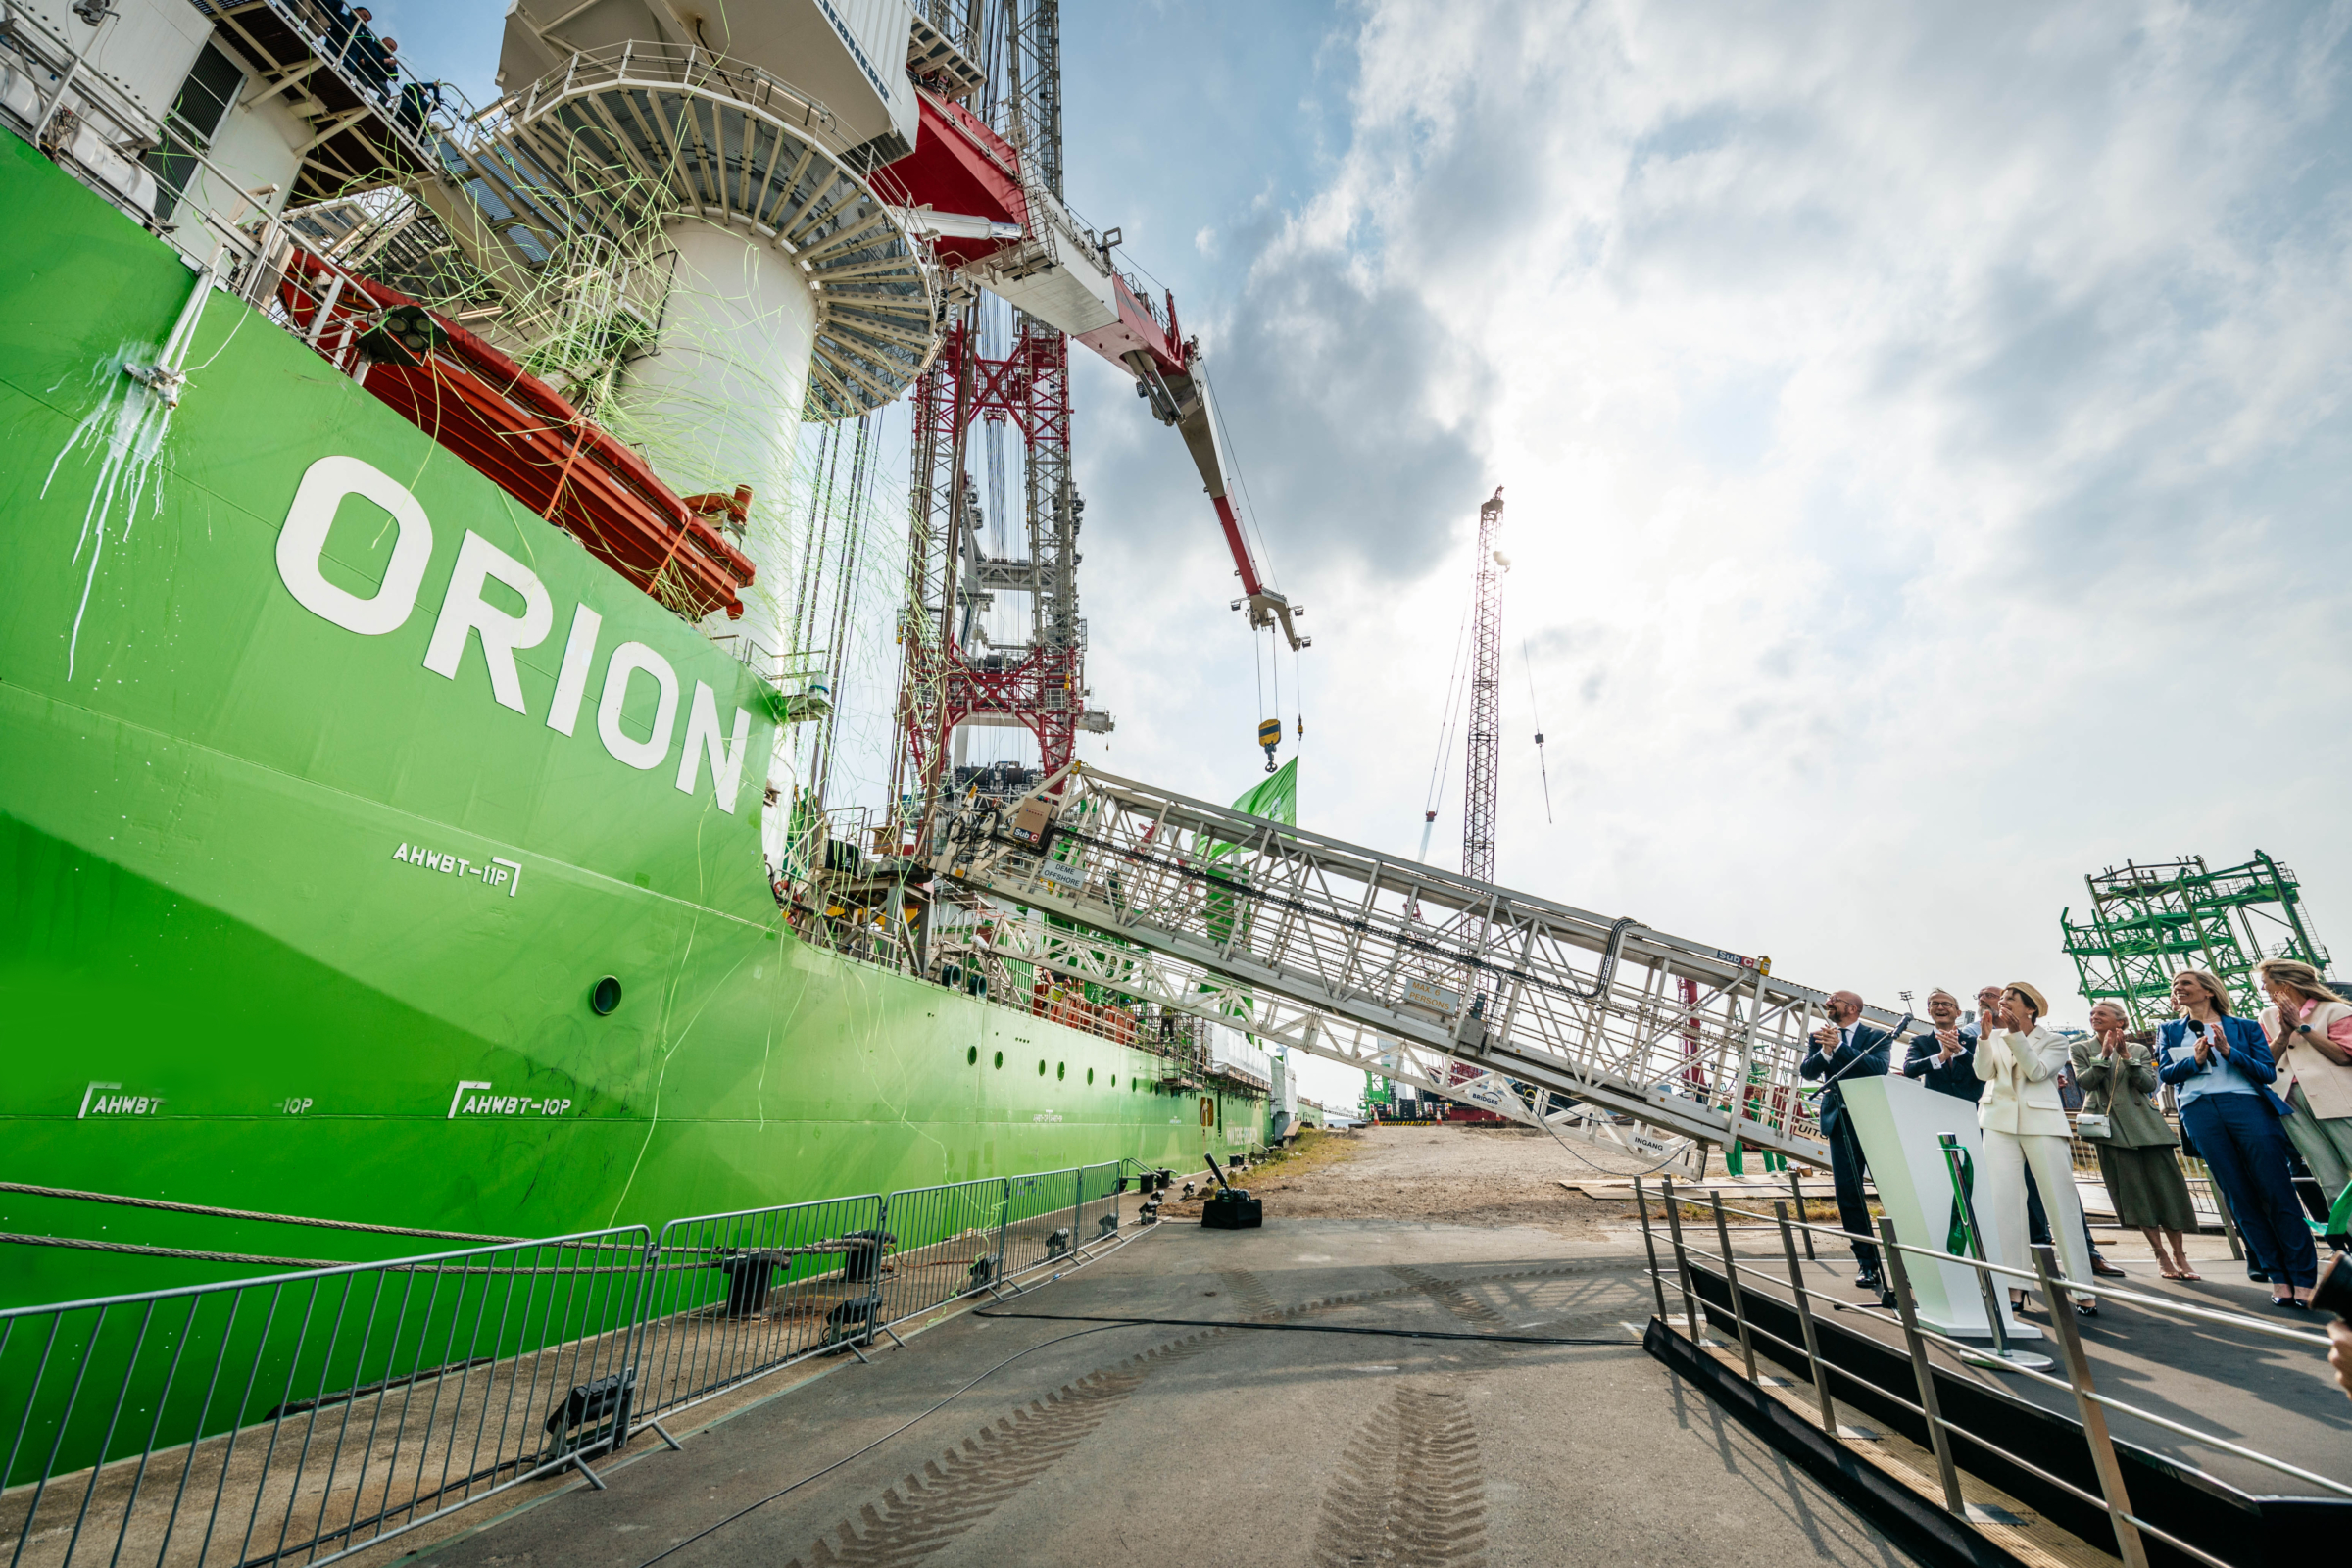 DEME’s revolutionary offshore installation vessel ‘Orion’ joins the fleet